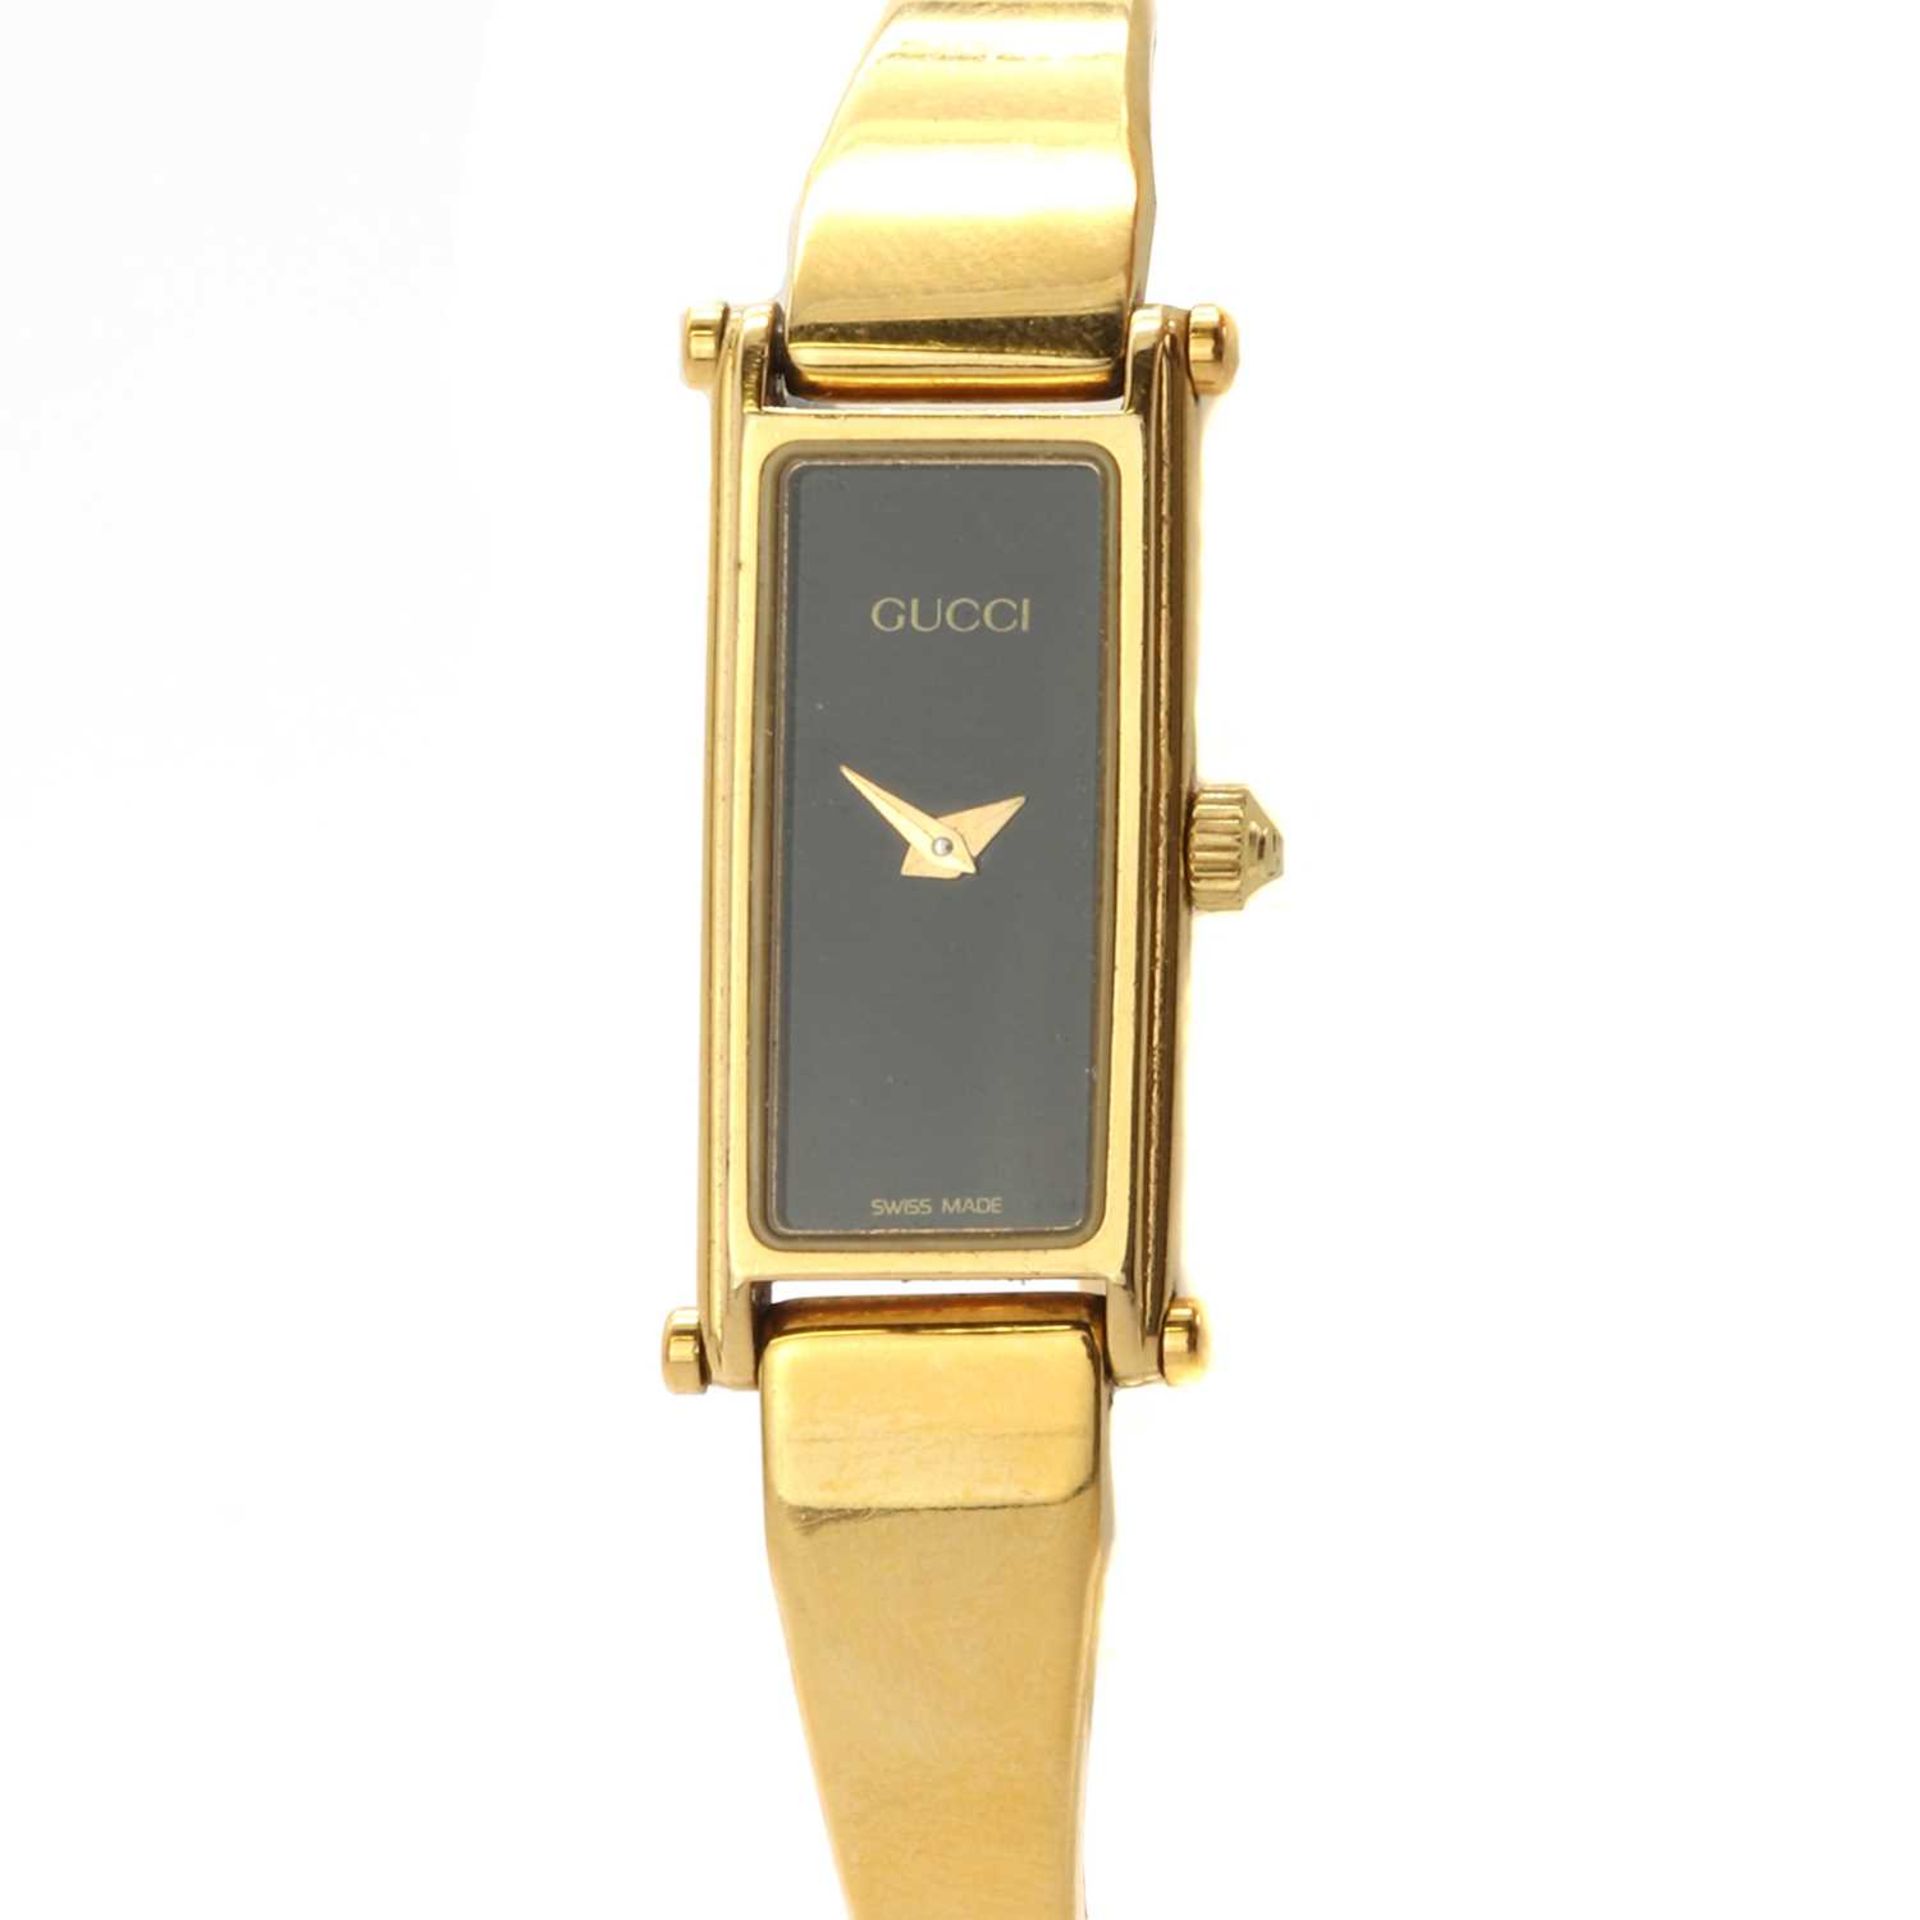 A ladies' gold plated Gucci quartz bangle watch,